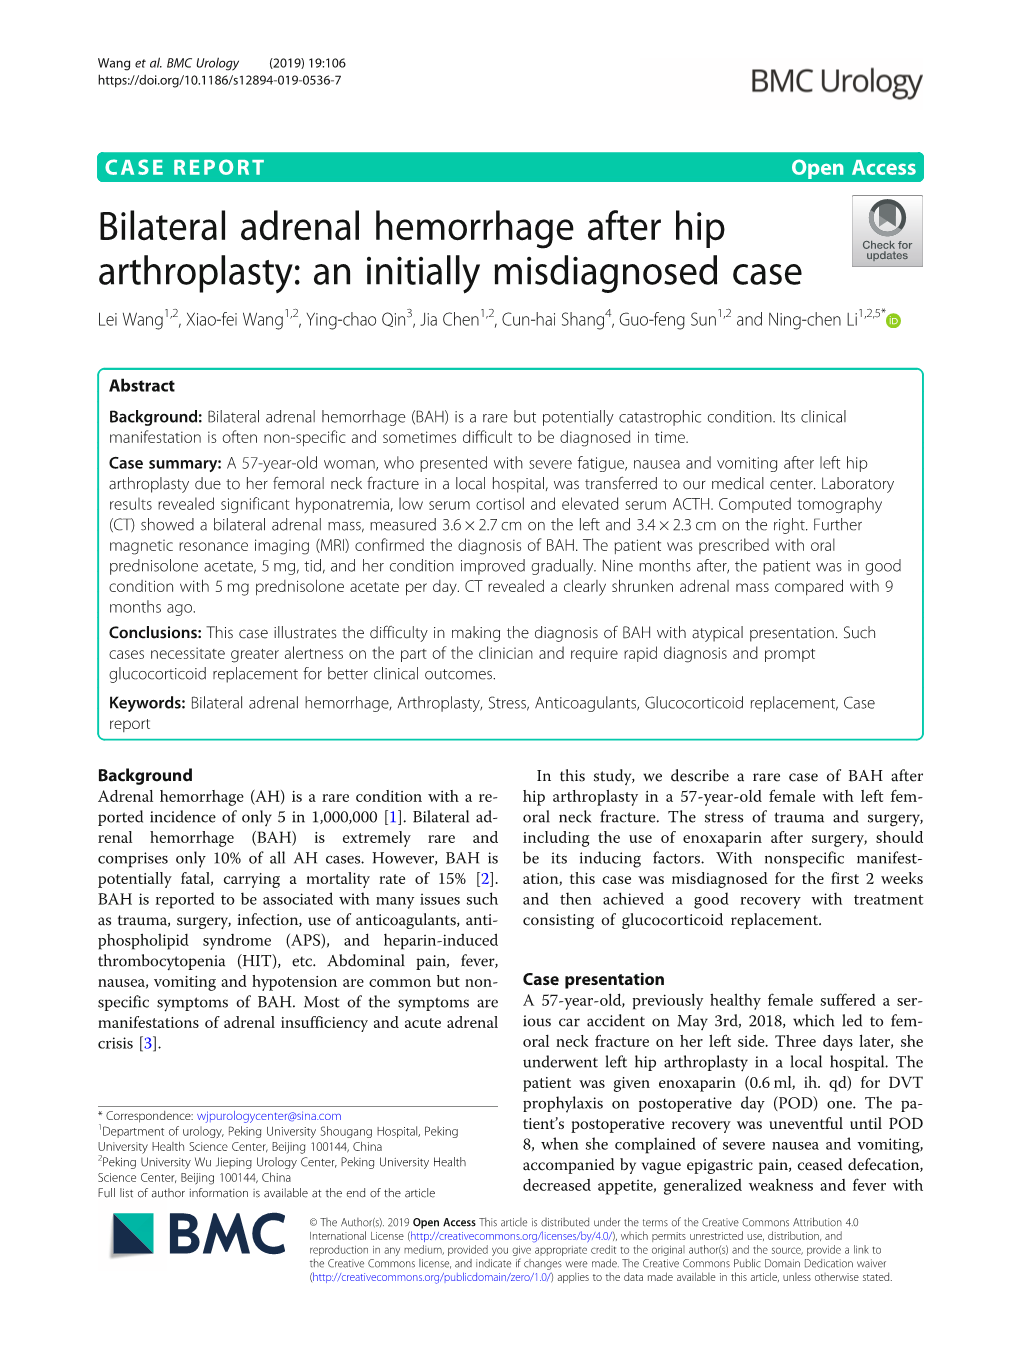 Bilateral Adrenal Hemorrhage After Hip Arthroplasty